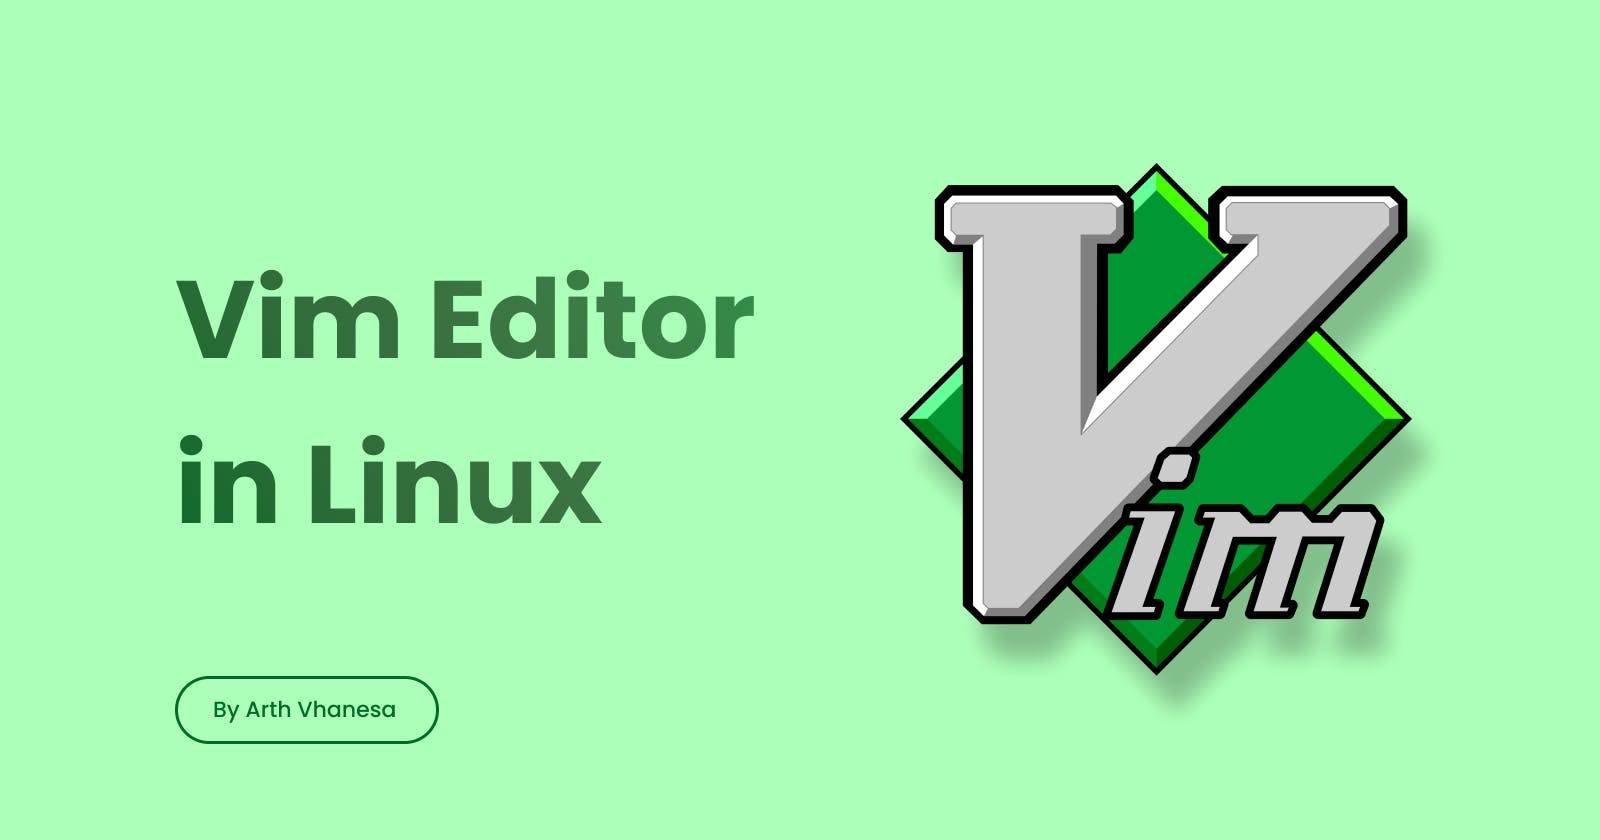 Vim Editor in Linux: Mastering the Basics